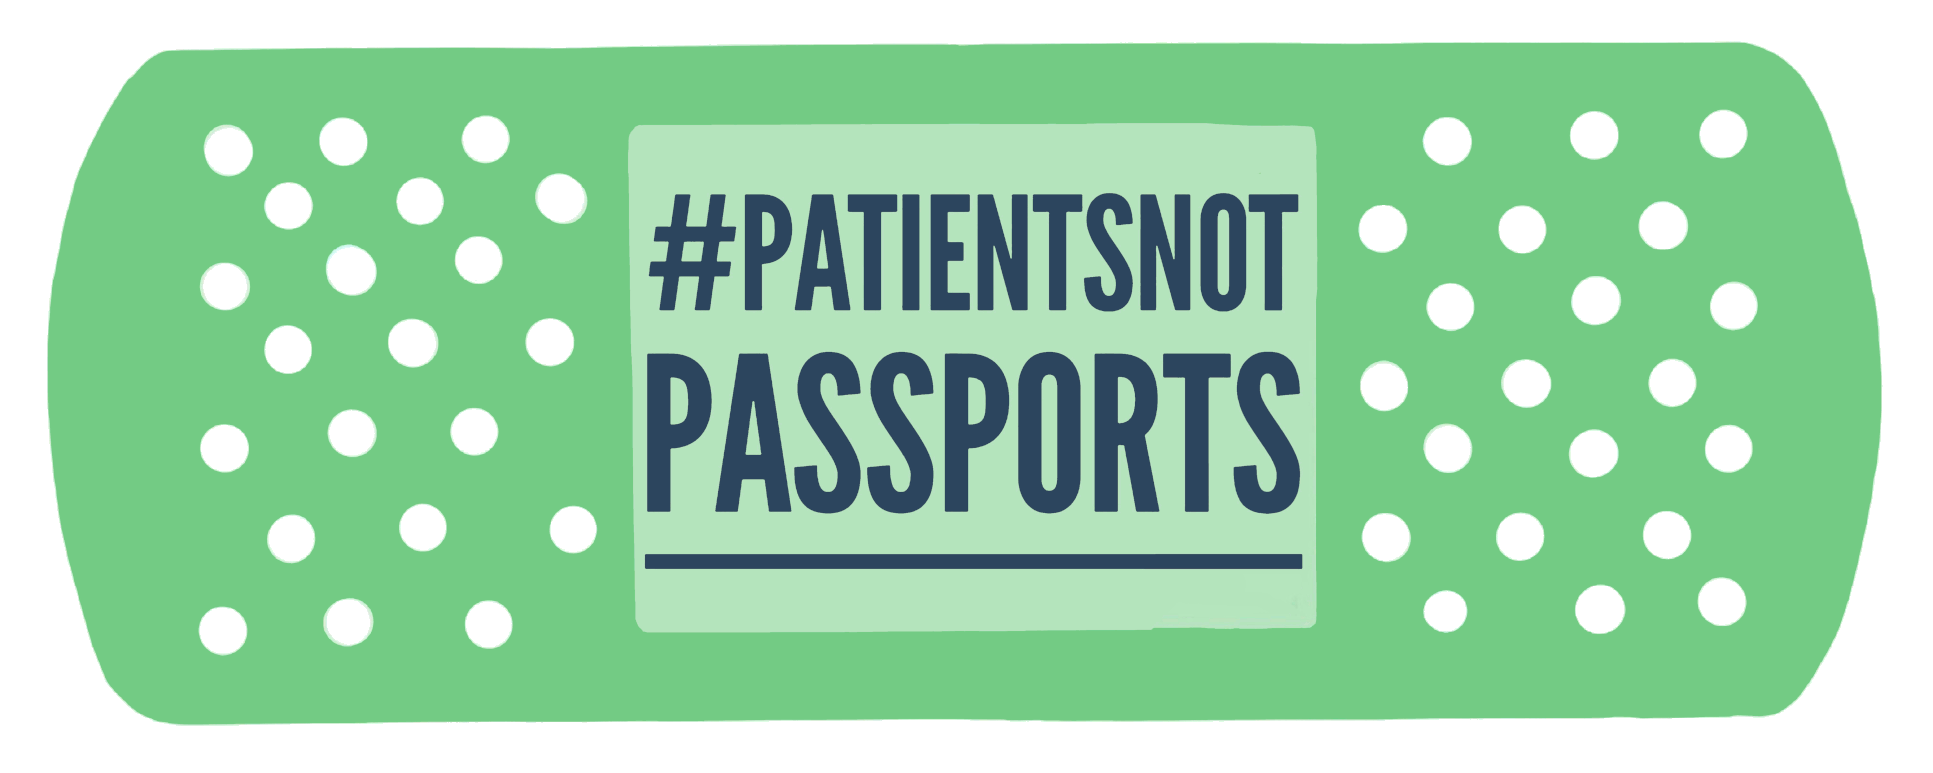 Patients not passports